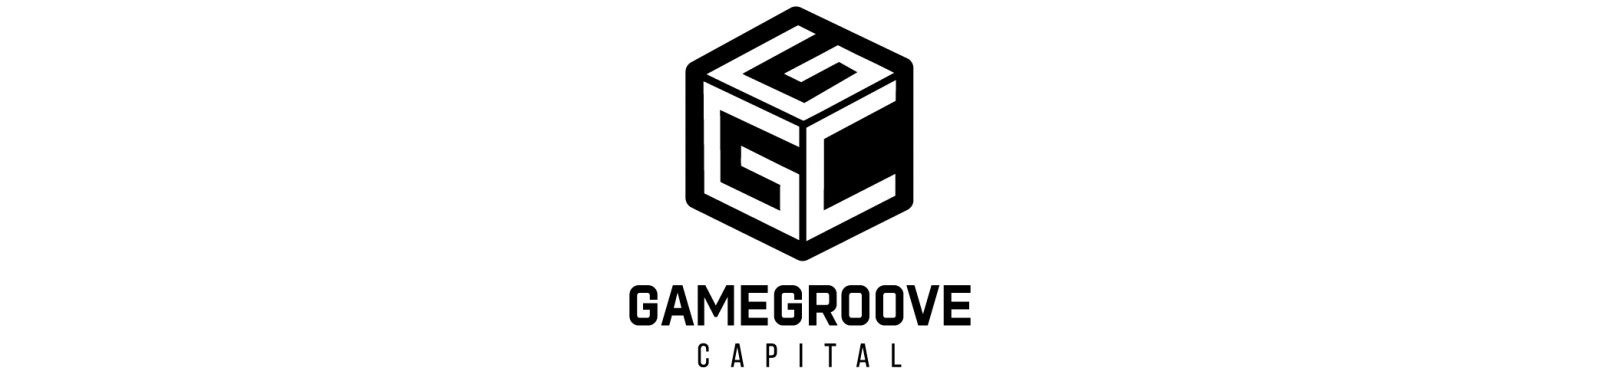 Gamegroove Capital - Black Logo